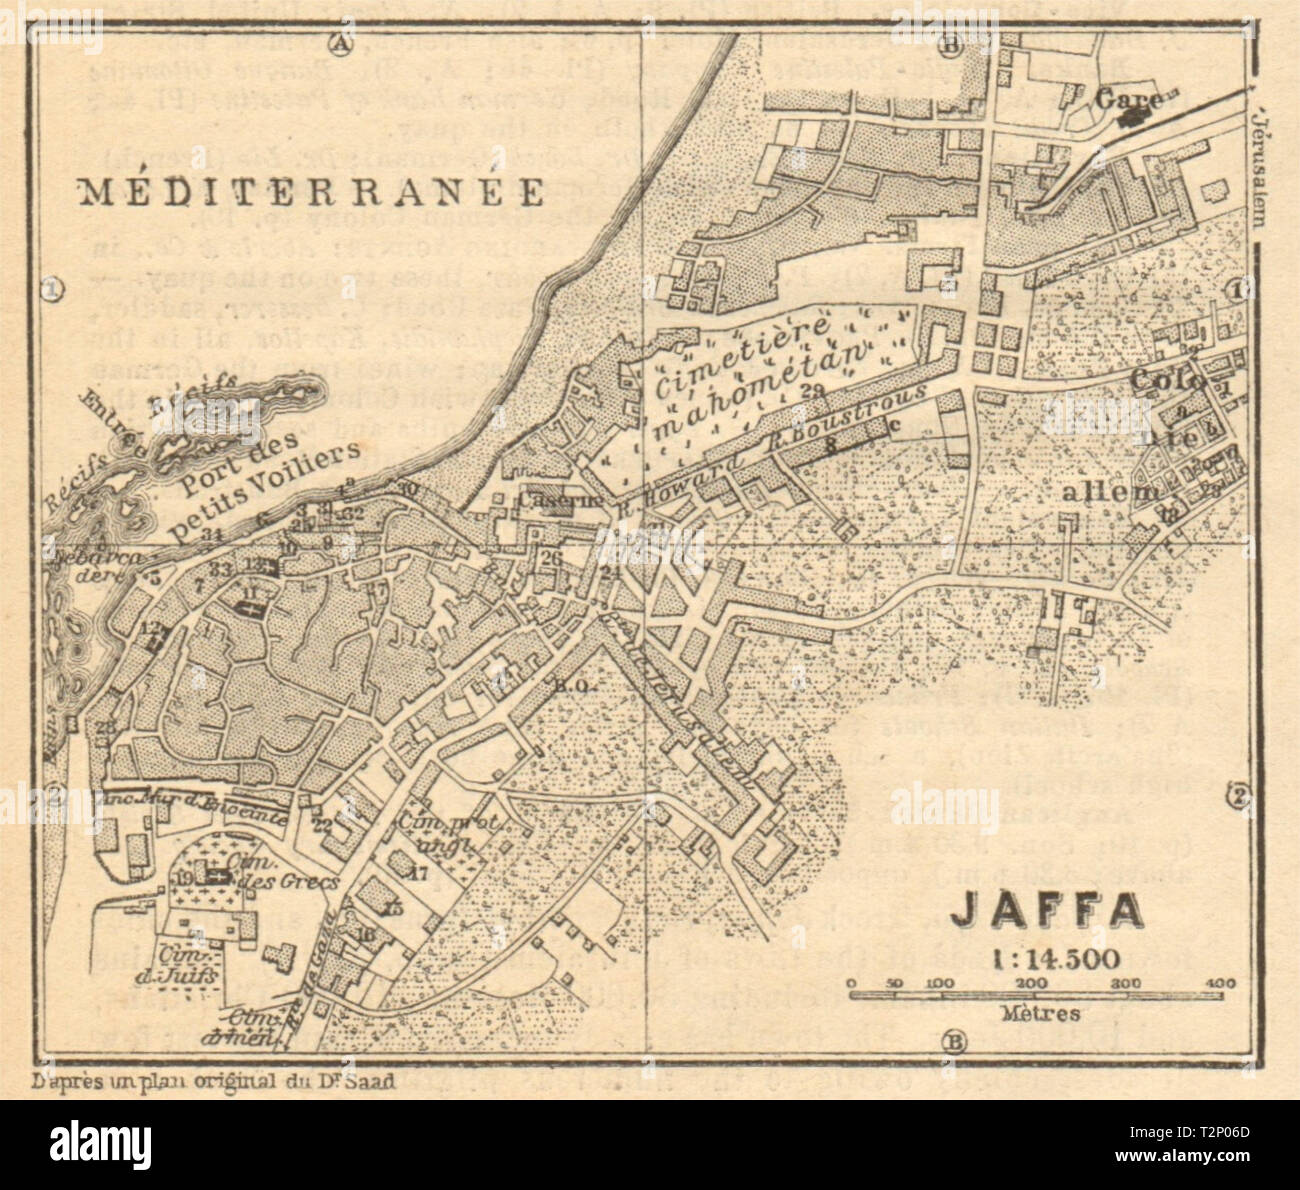 Jaffa / Tel Aviv antique town city plan. Yafo. Israel. SMALL 1912 old map Stock Photo